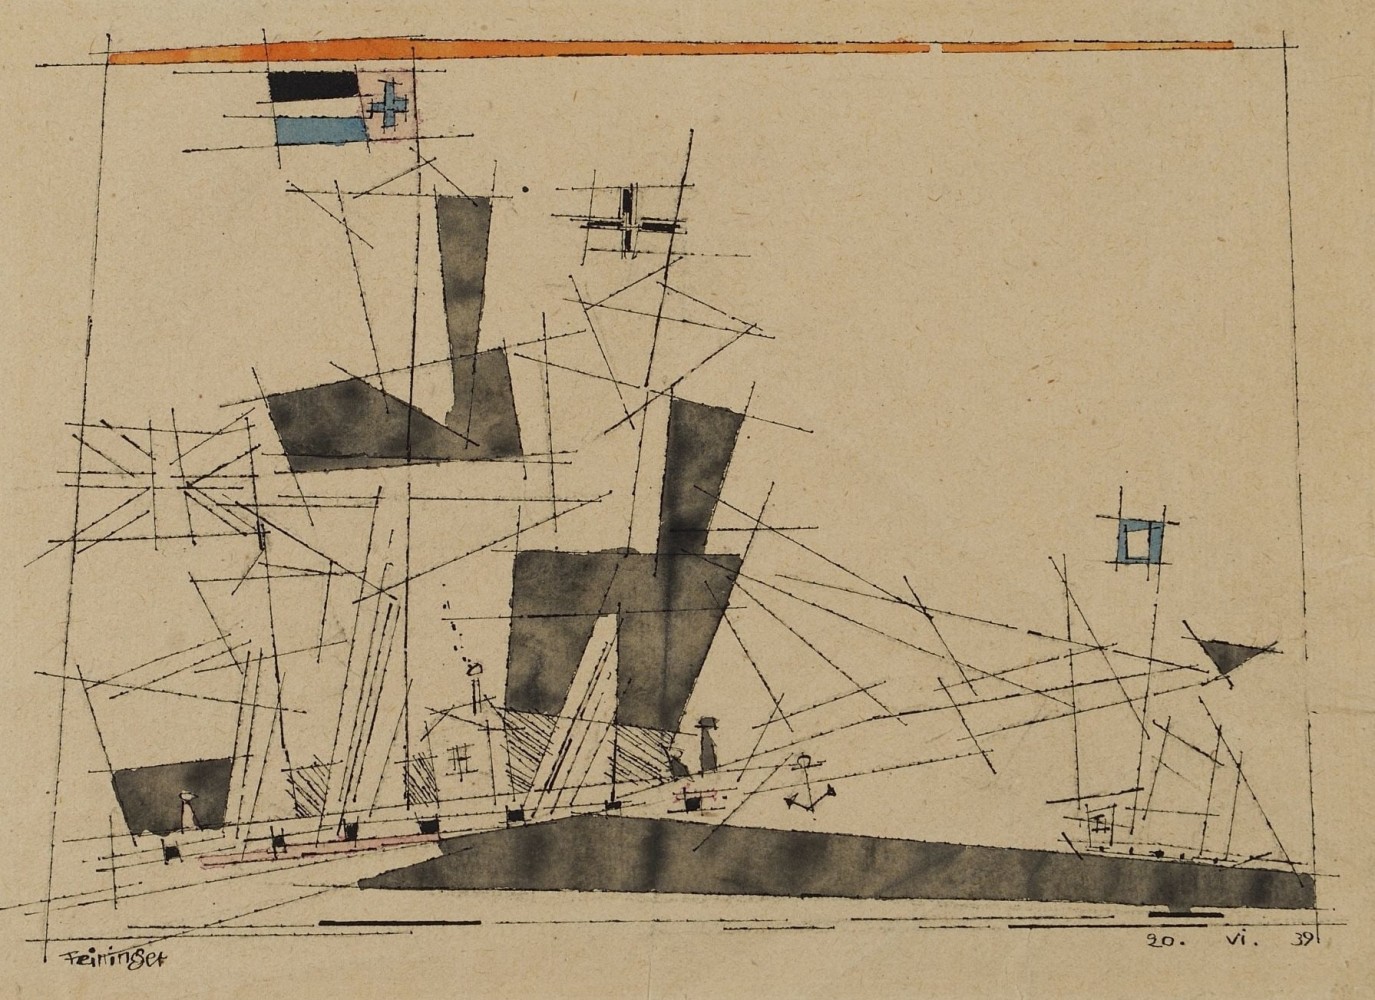 Lyonel&amp;nbsp;Feininger (1871&amp;mdash;1956)

(Two Sailing Ships),&amp;nbsp;1935

Watercolor and ink on paper

7 5/8 x 10 5/16 in. (19.4 x 26.2 cm)

Signed lower left:&amp;nbsp;Feininger

Dated lower right:&amp;nbsp;20. VI. 39